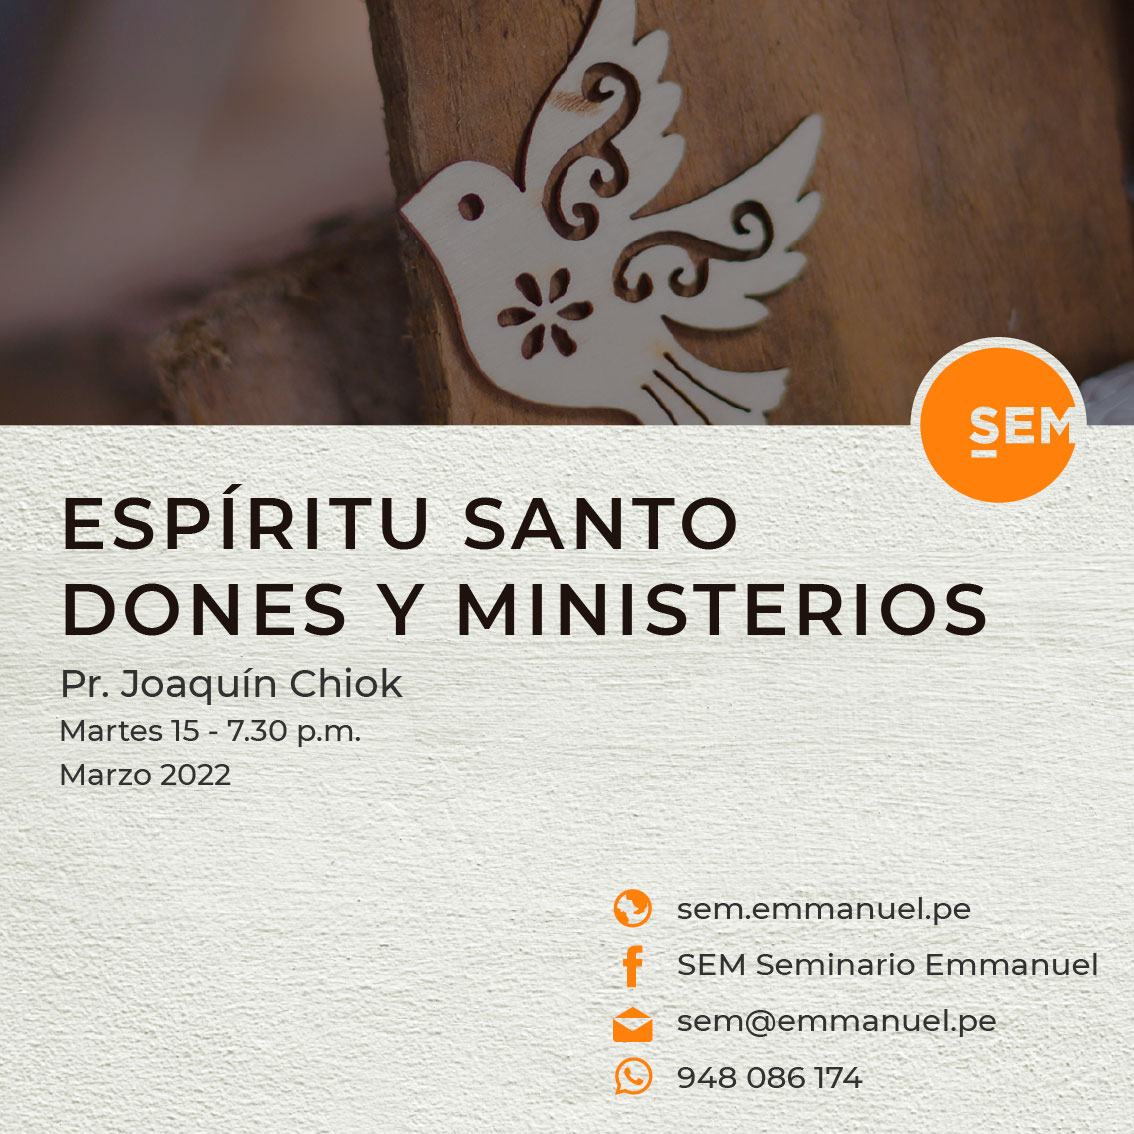 SEM: ESPÍRITU SANTO - DONES Y MINISTERIOS